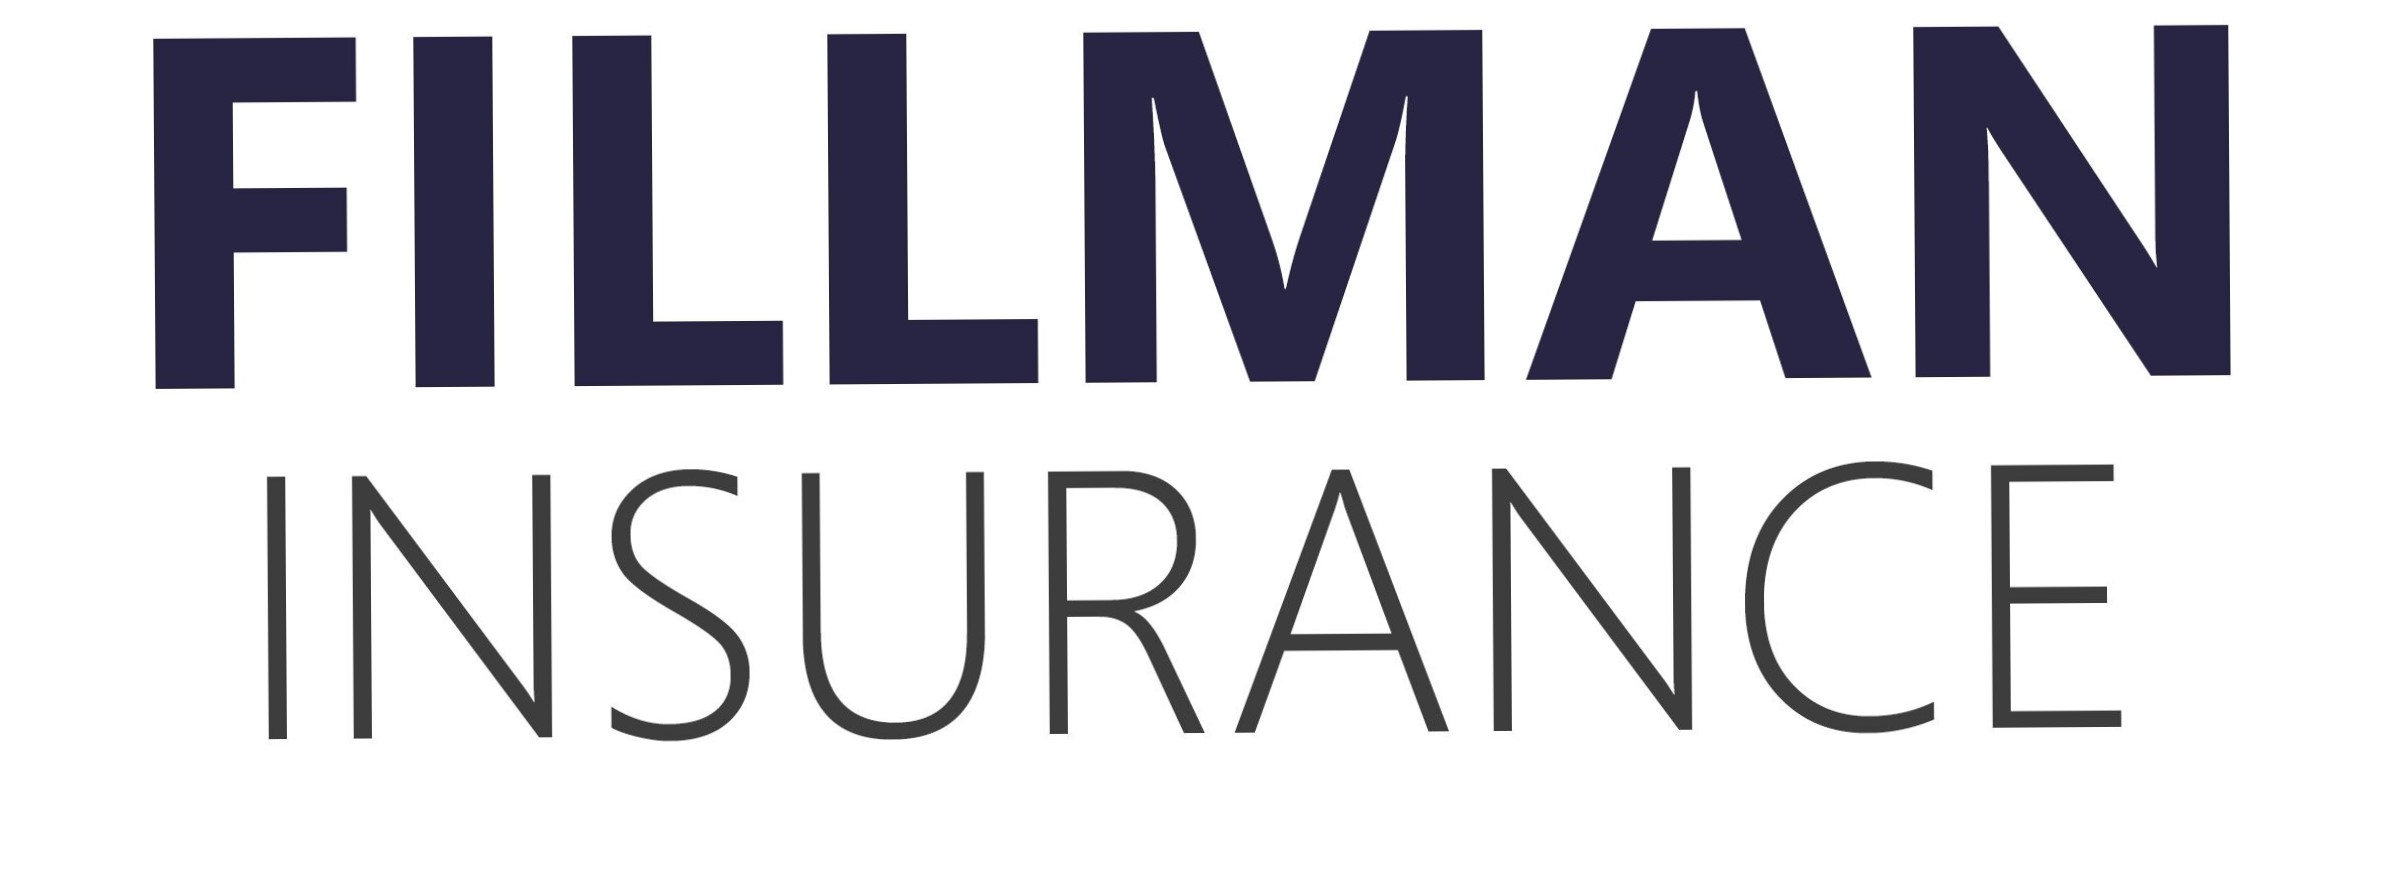 Fillman Insurance's Image